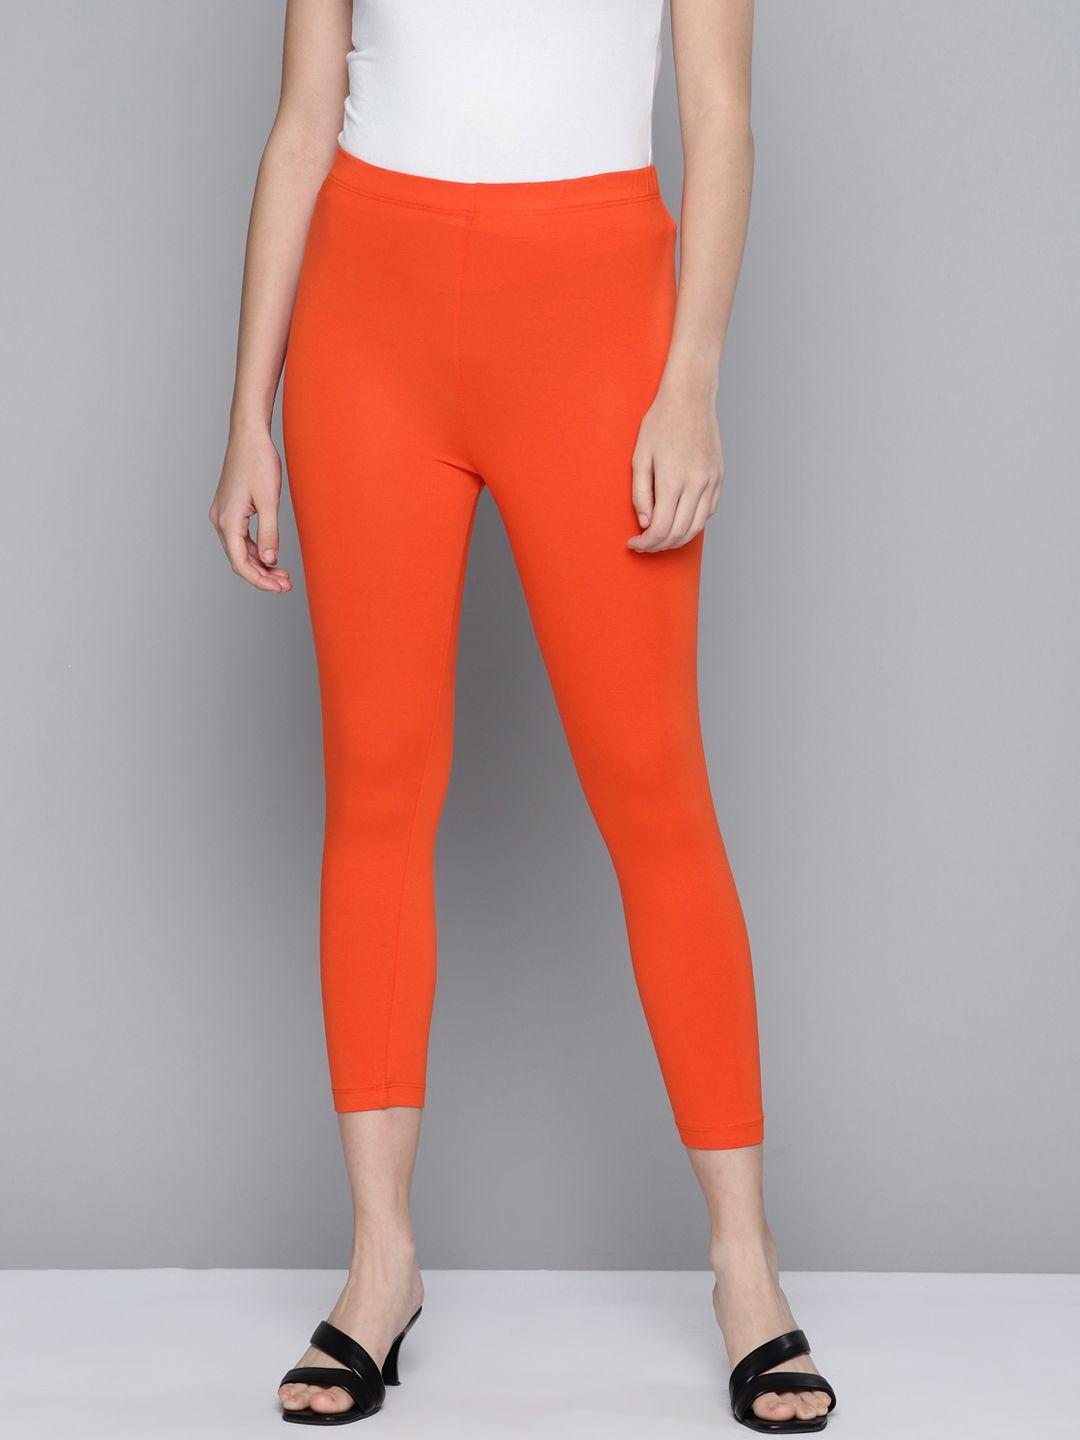 here&now women orange solid three-fourth length leggings